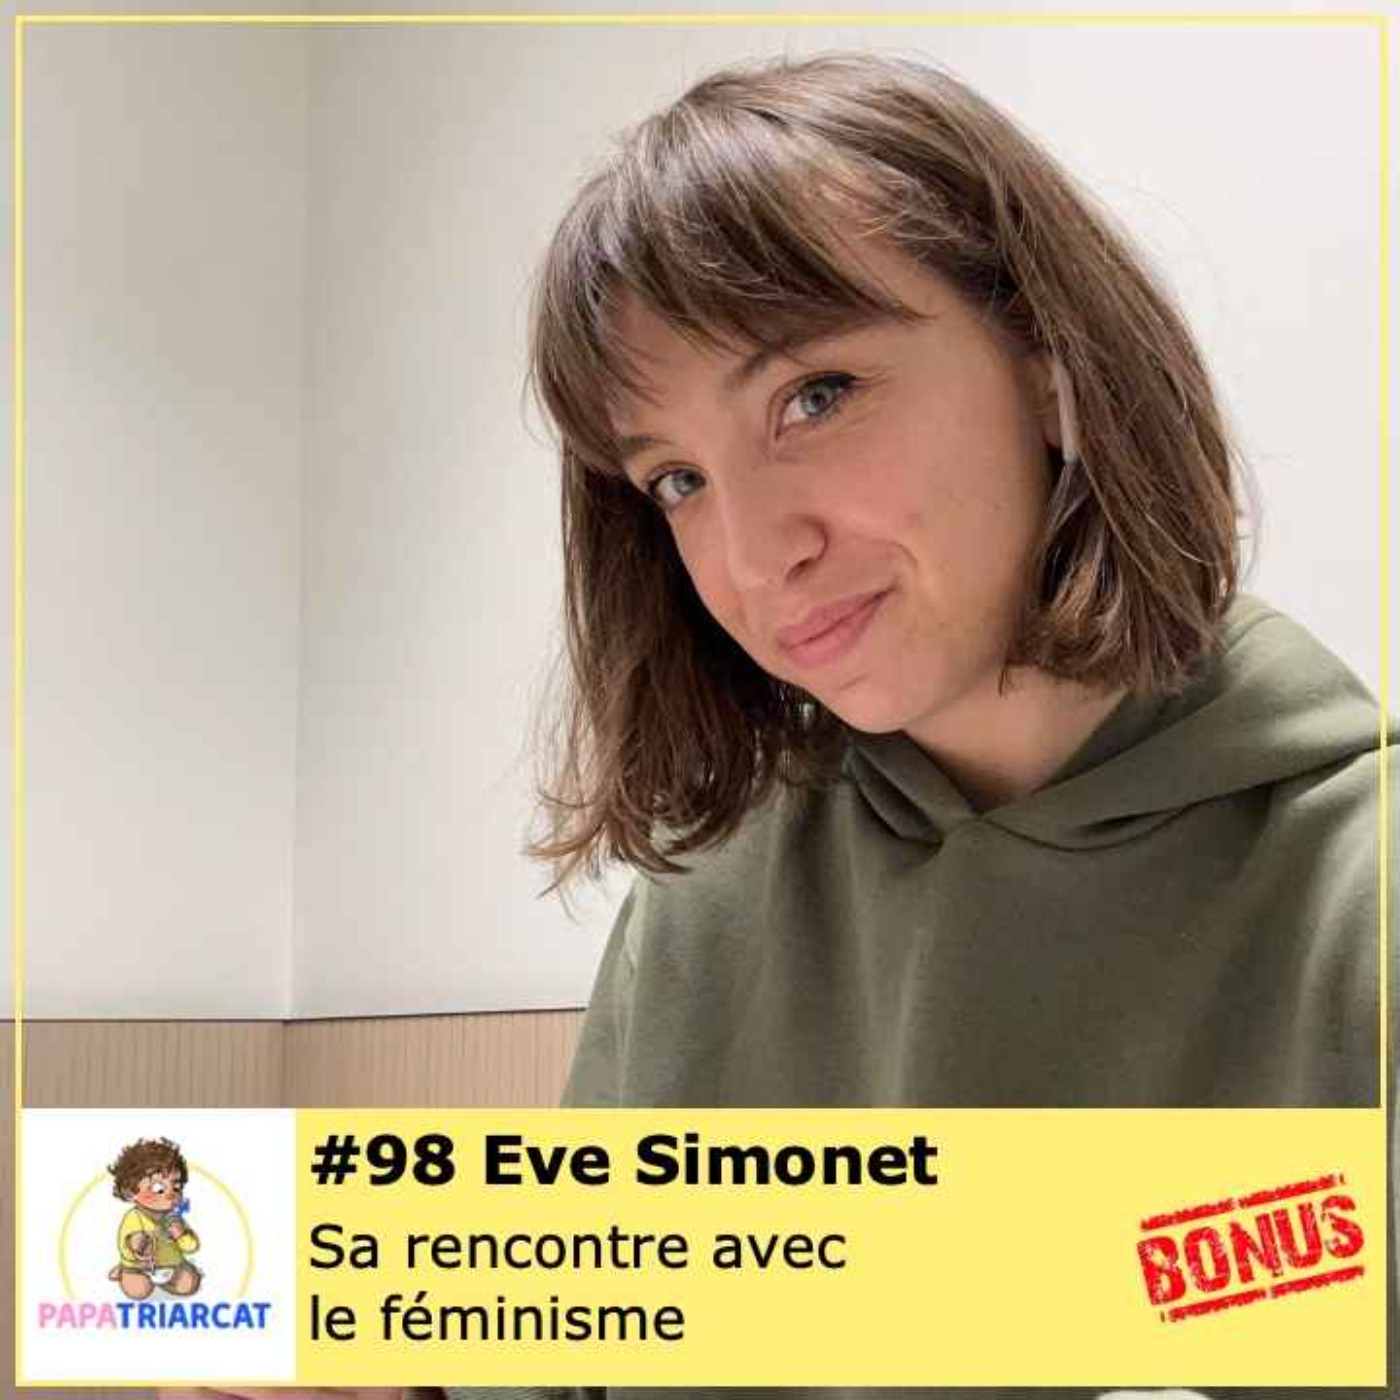 DECOUVERTE BONUS #98 - Sa rencontre avec le féminisme - Eve Simonet